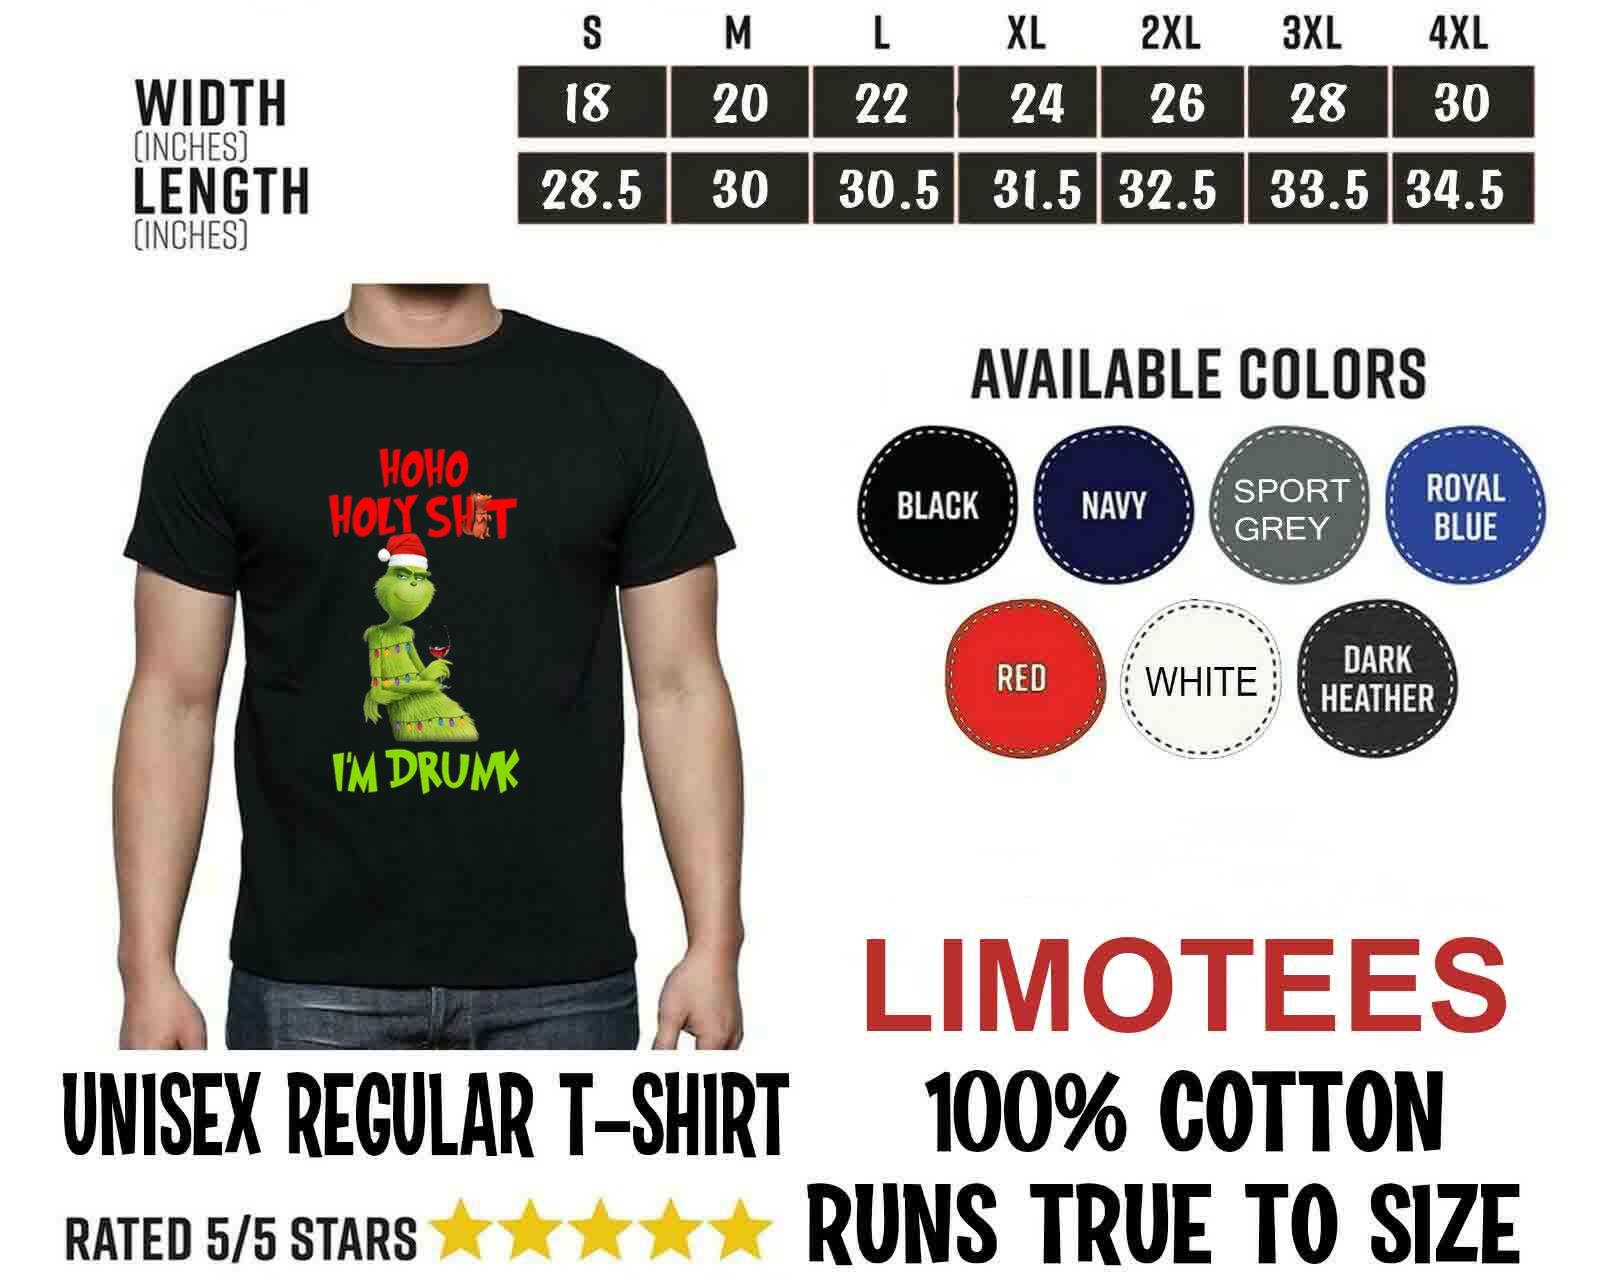 Teenage Mutant Ninja Turtles Christmas Ho Ho Heroes T-Shirt.png